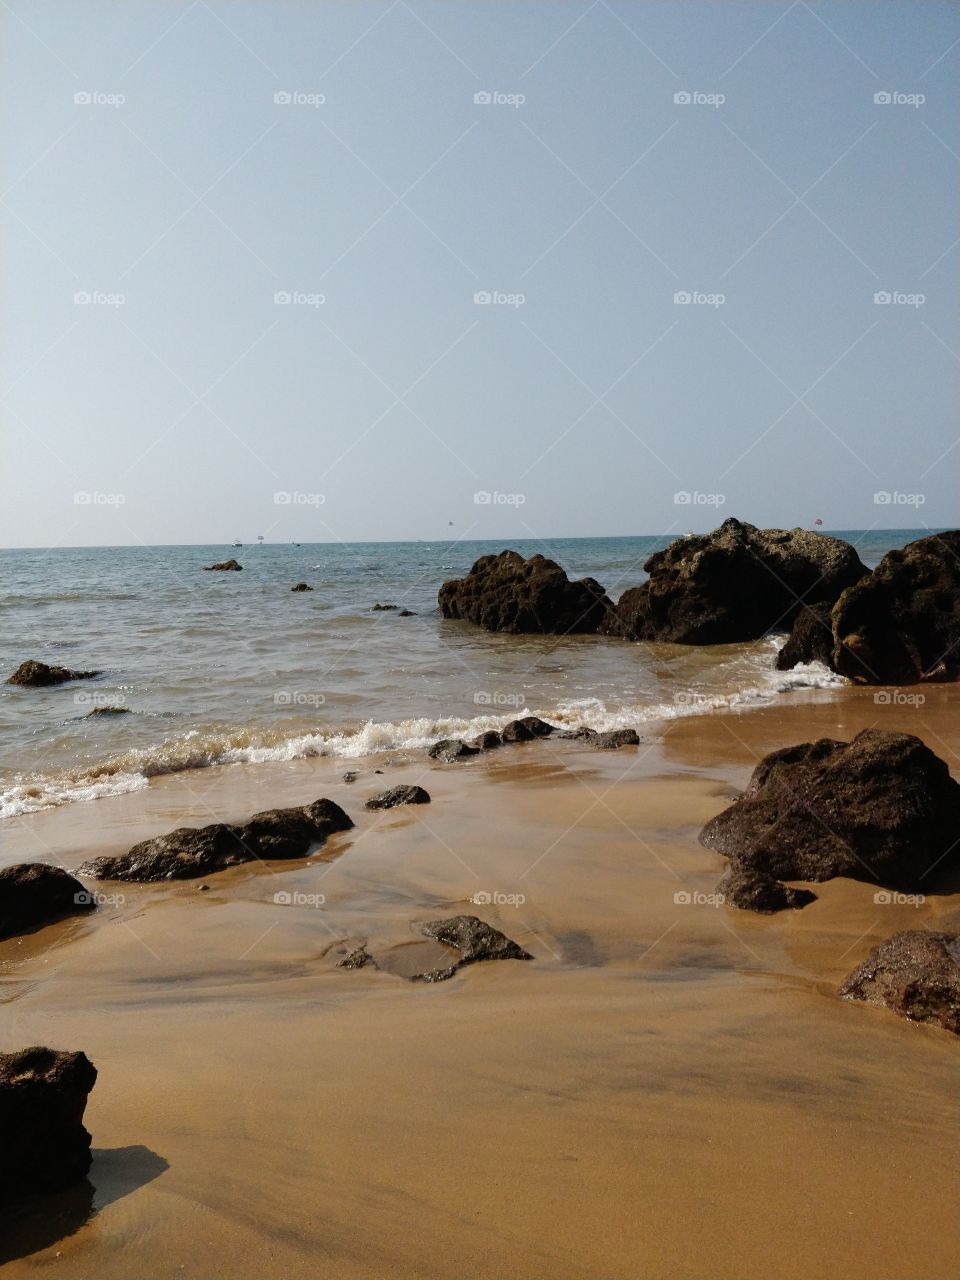 sea shore with rocks around. nature, beauty, sand, beach, sea, waves, water